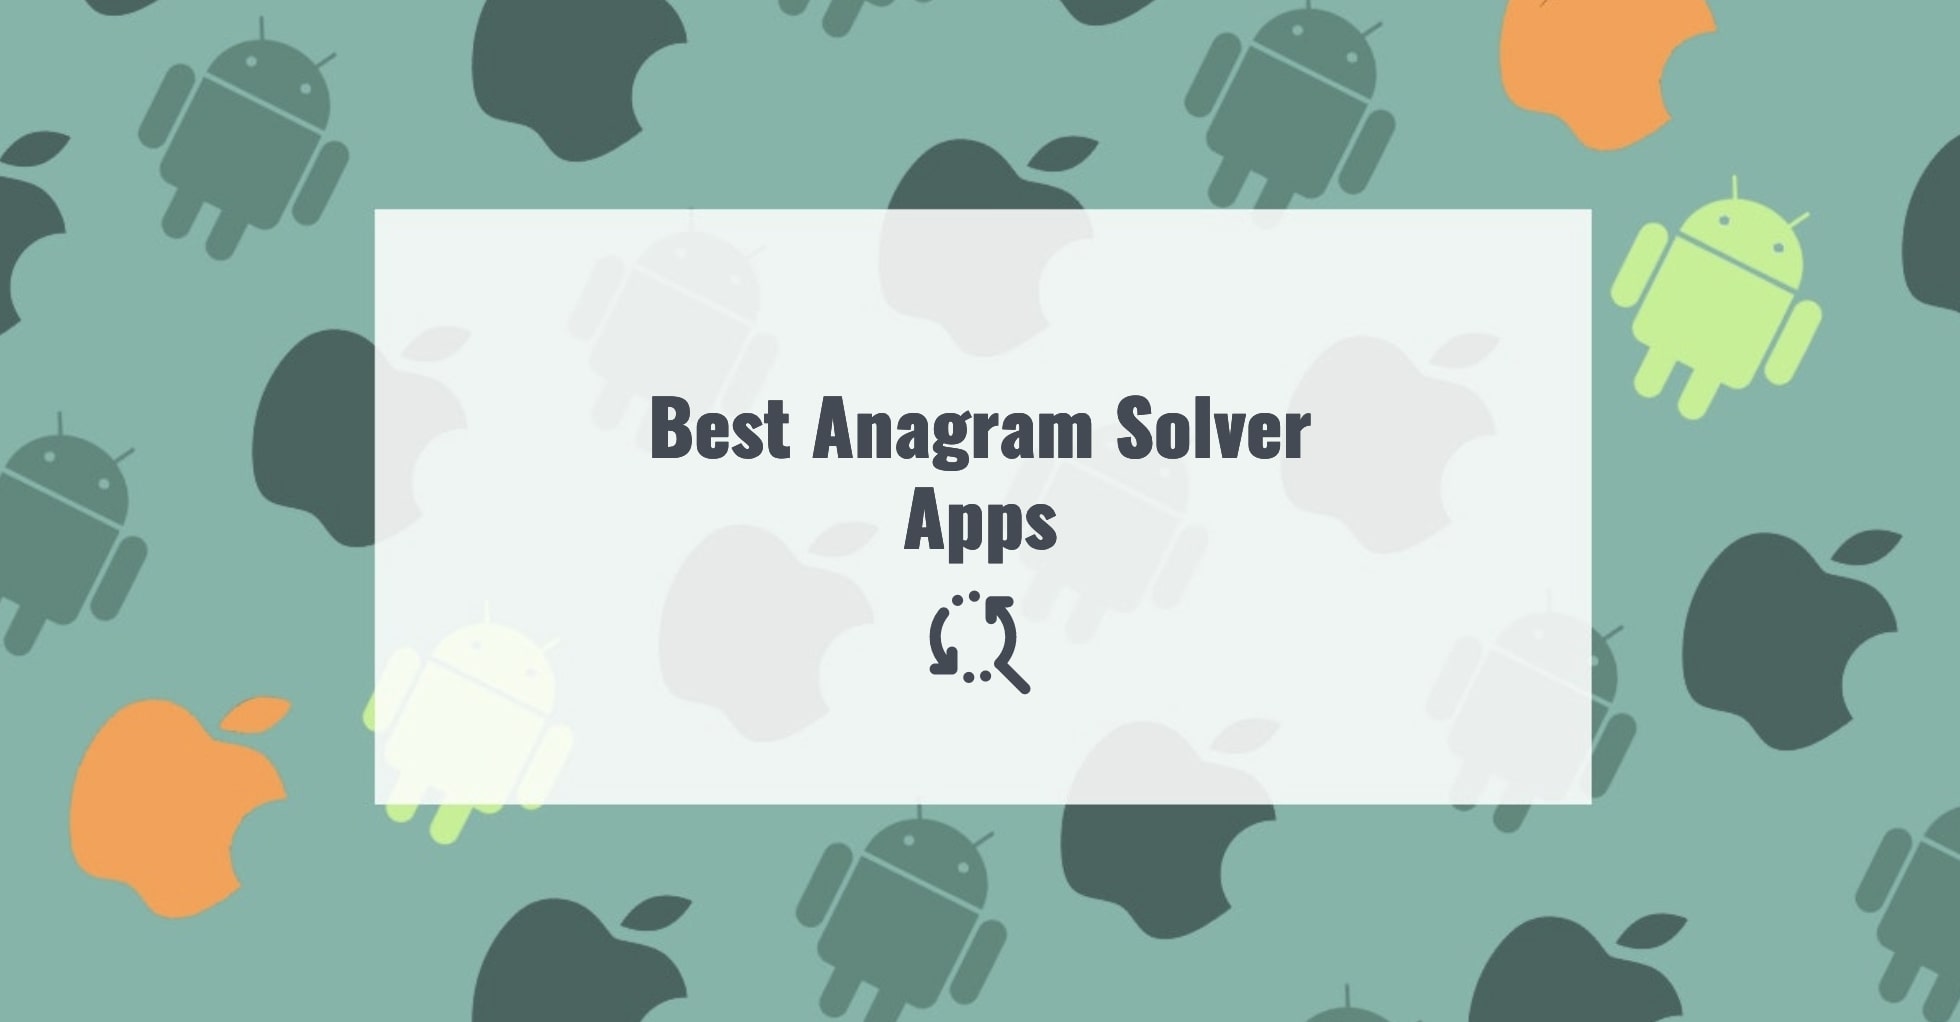 Best Anagram Solver Apps